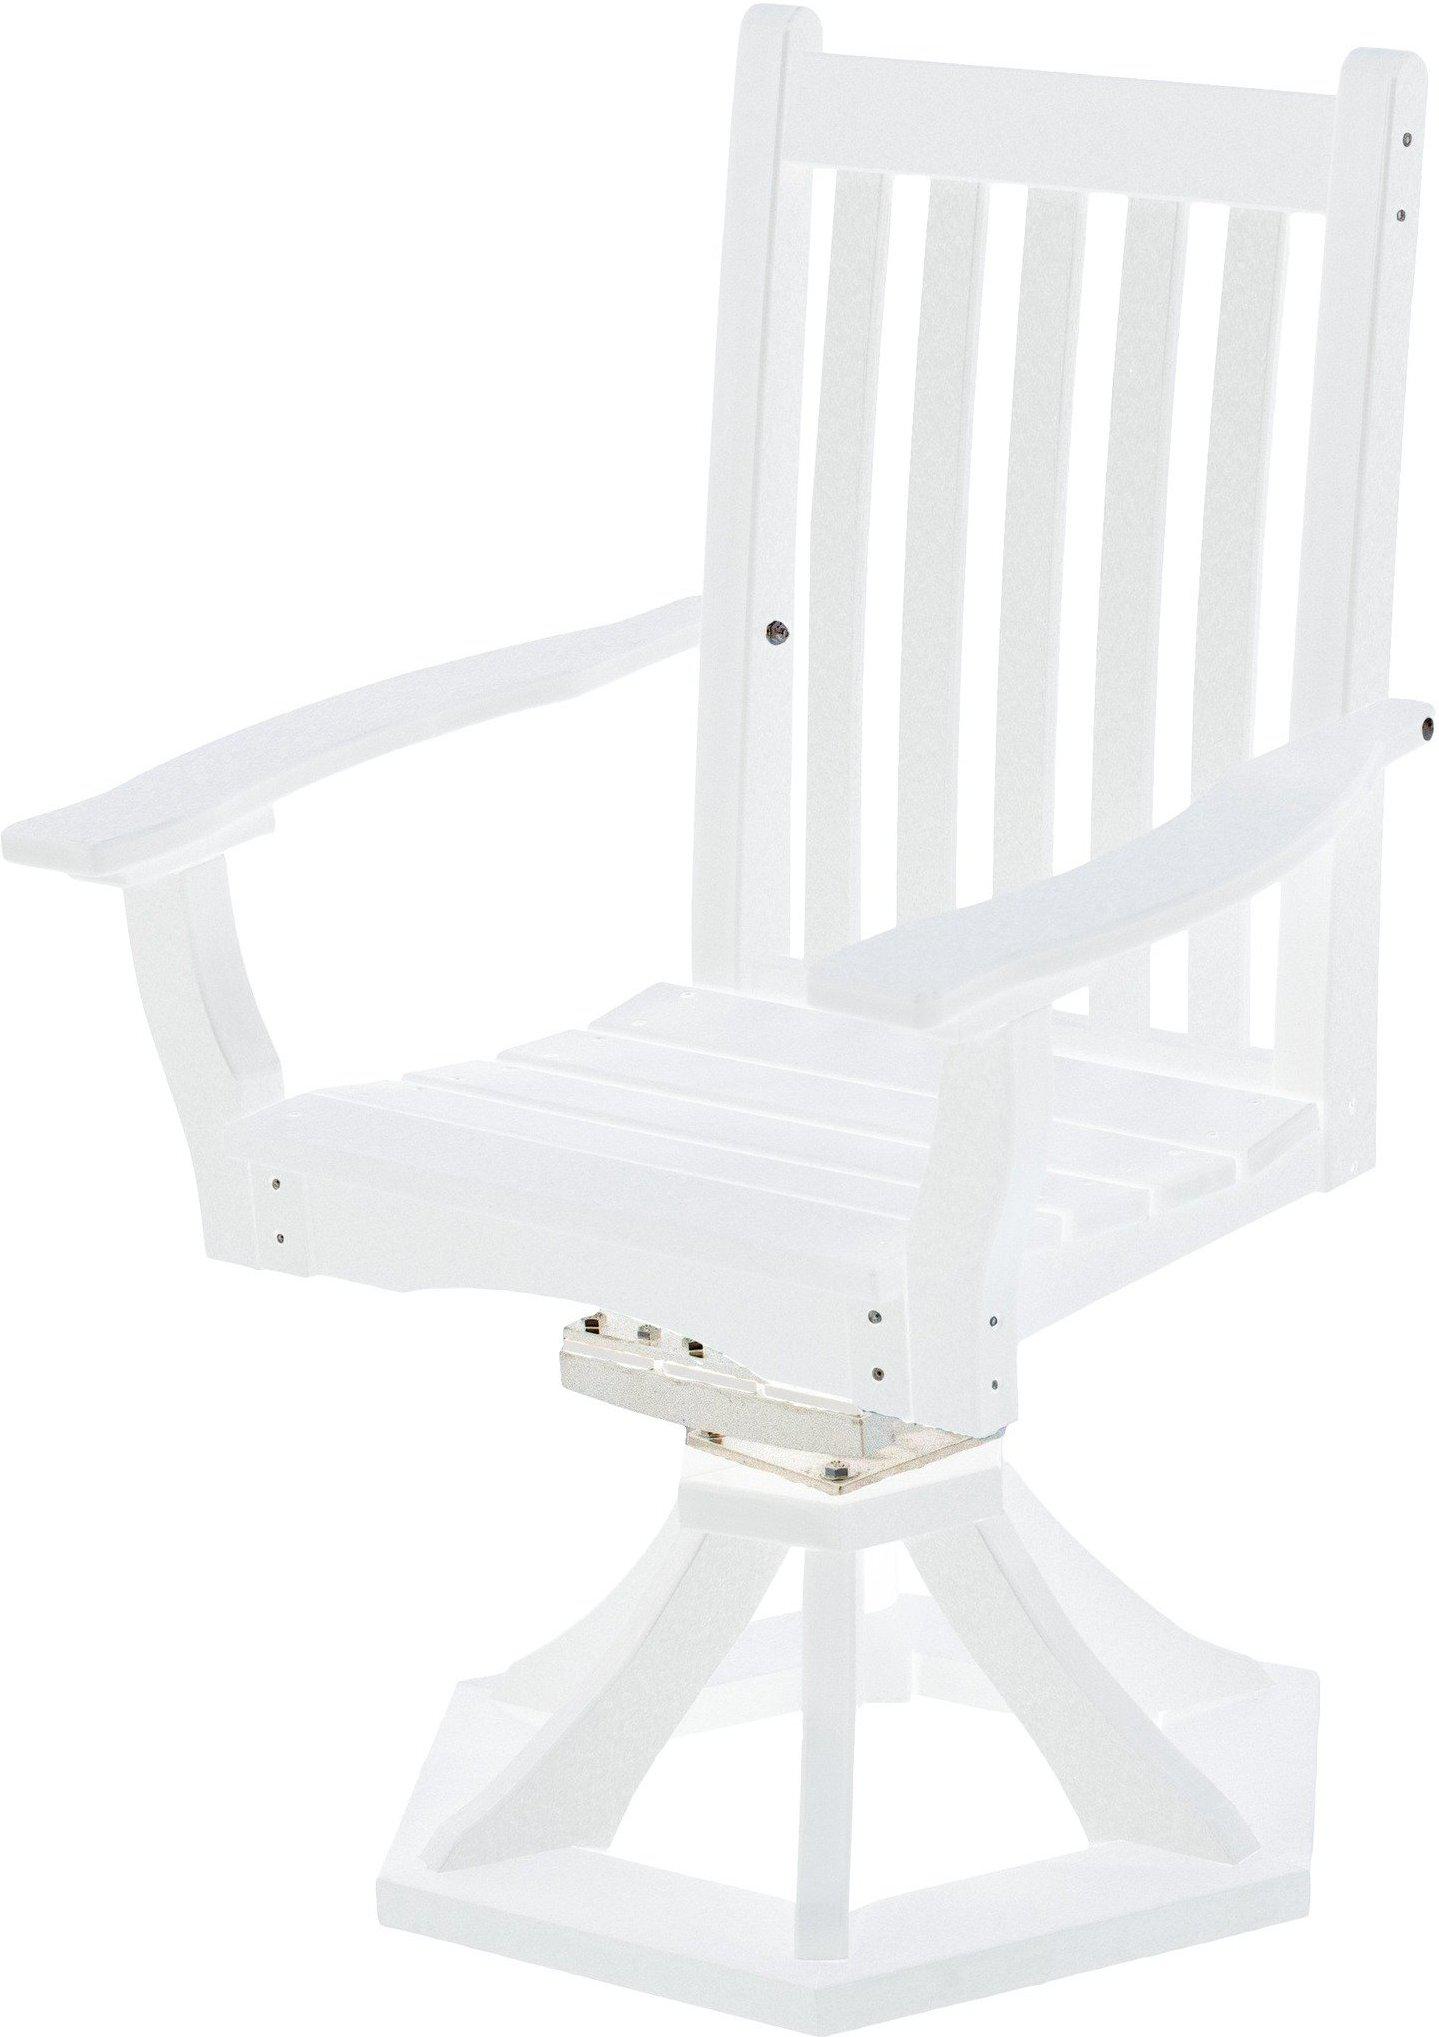 Wildridge Classic Recycled Plastic Swivel Rocker Side Chair w/Arms  - White